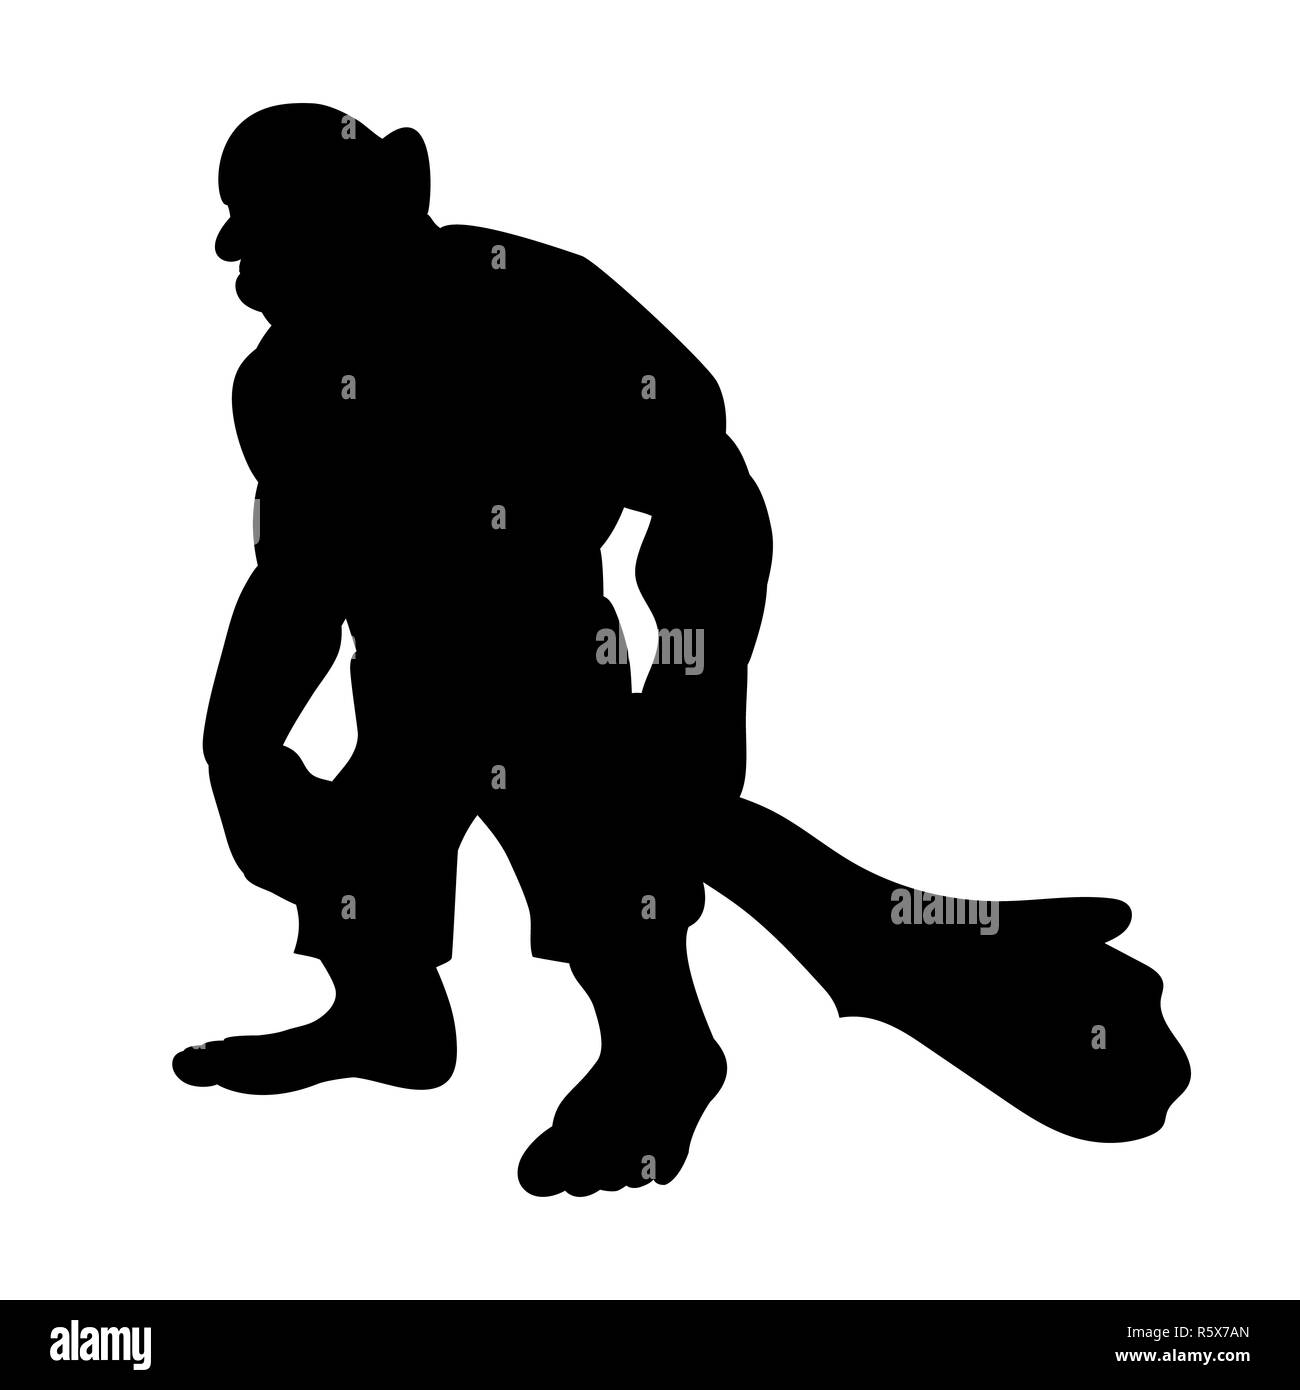 Giant person silhouette monster villain fantasy Stock Photo